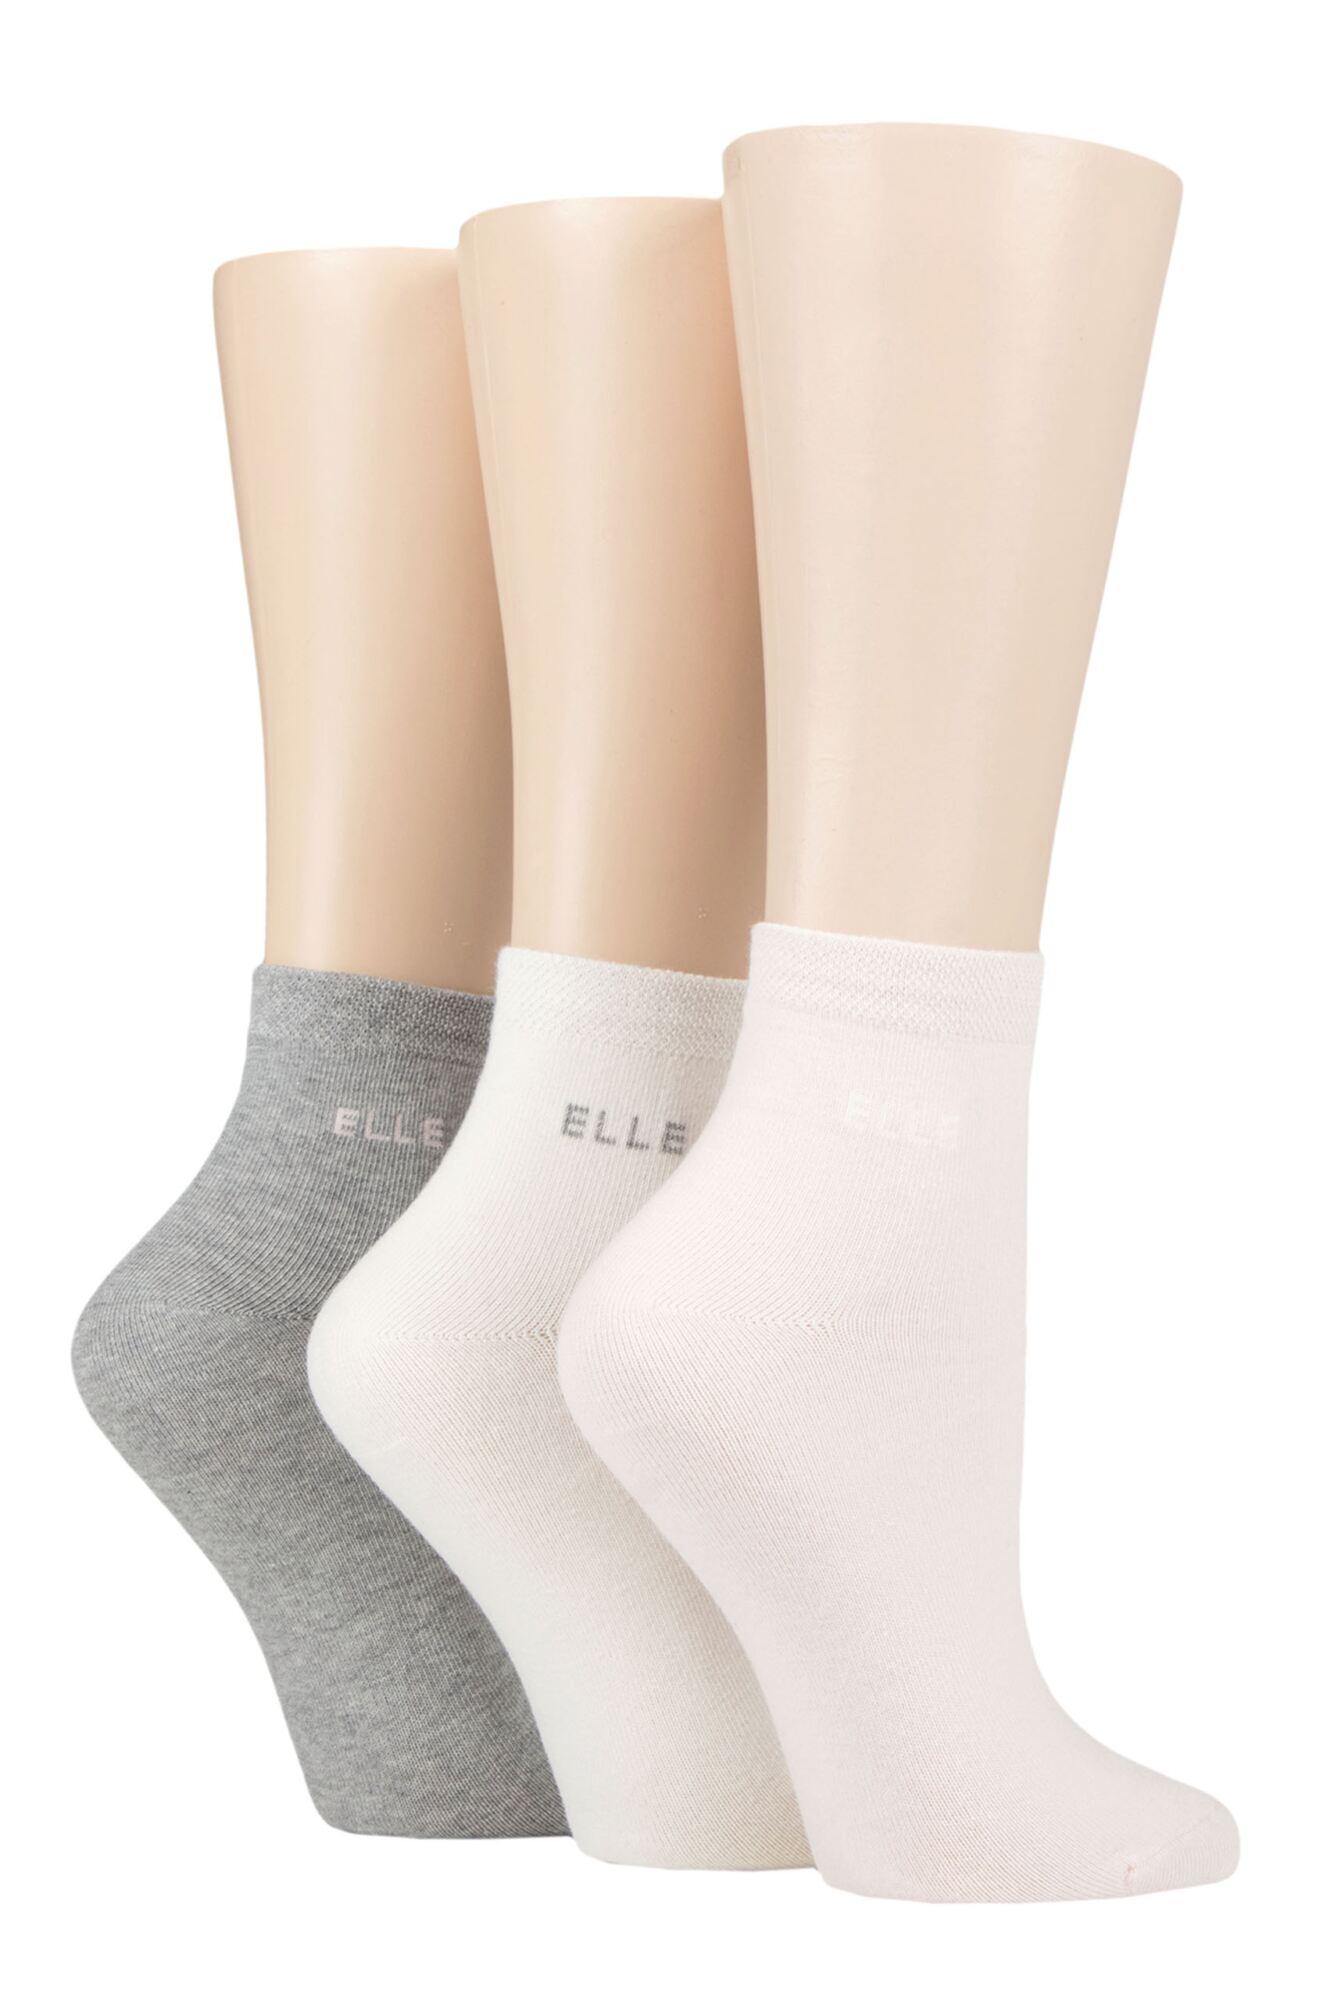 3 Pair Plain, Striped and Patterned Cotton Anklets Ladies - Elle